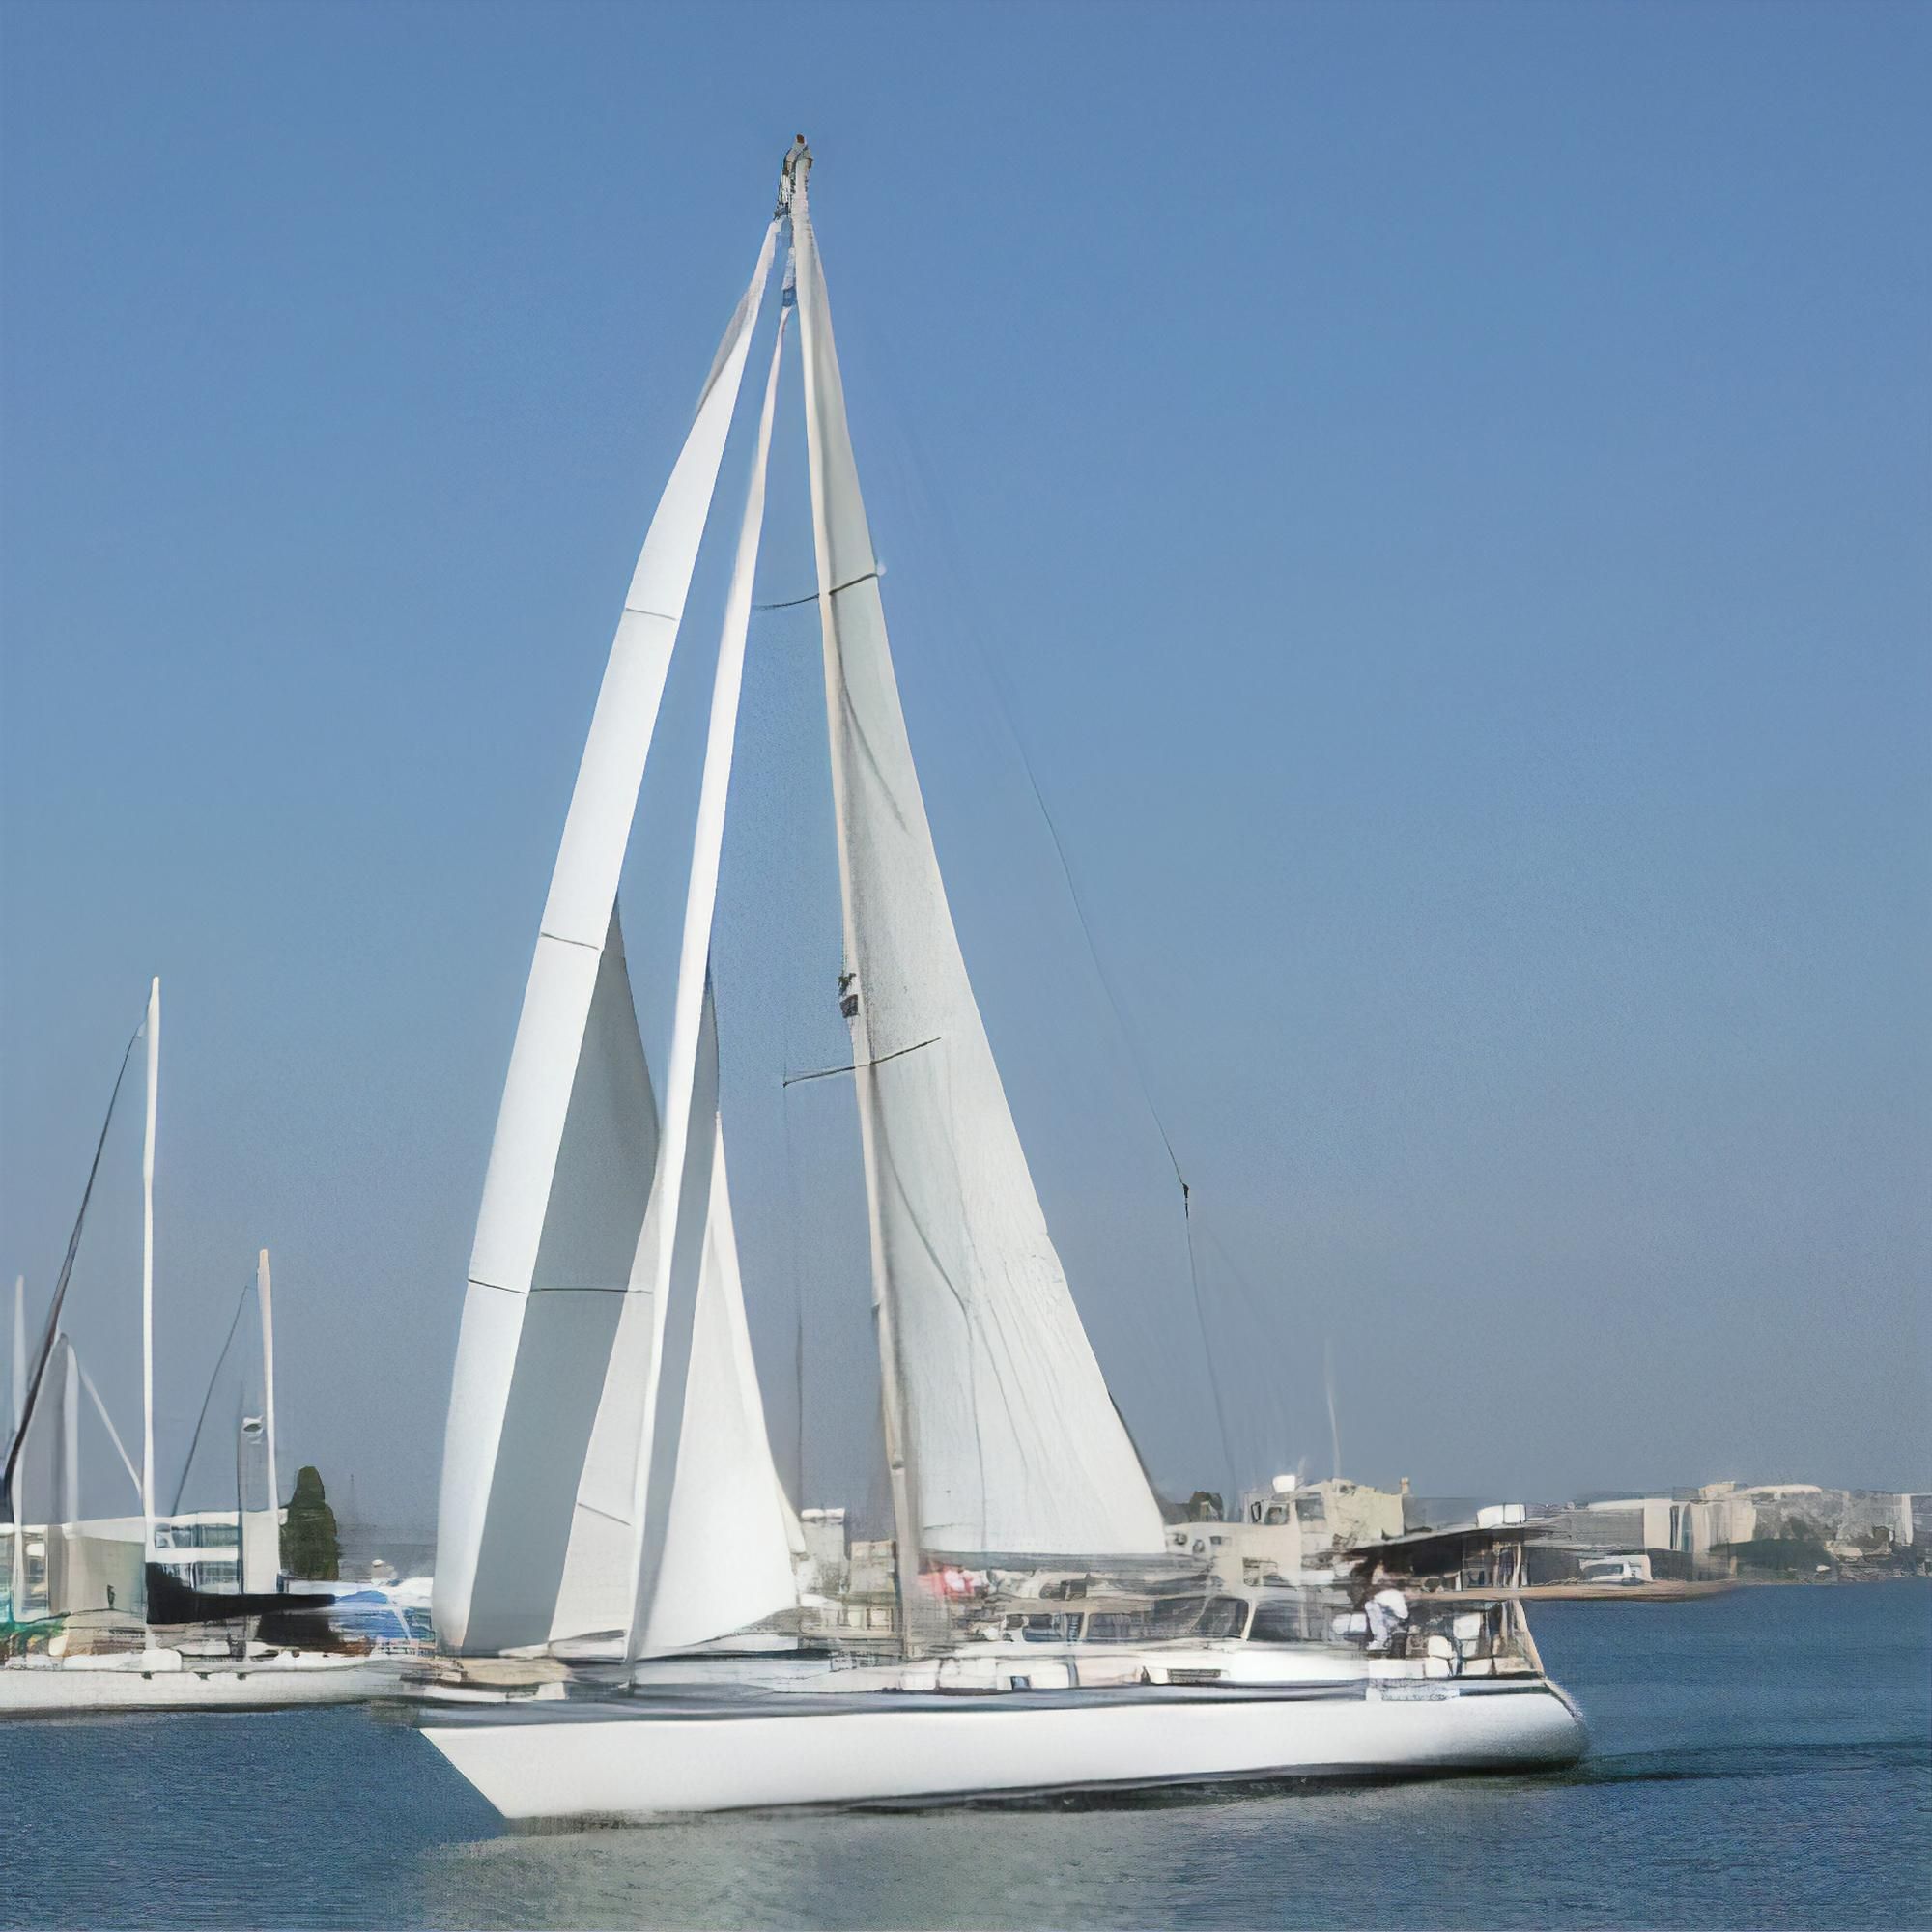 54 foot hunter sailboat for sale